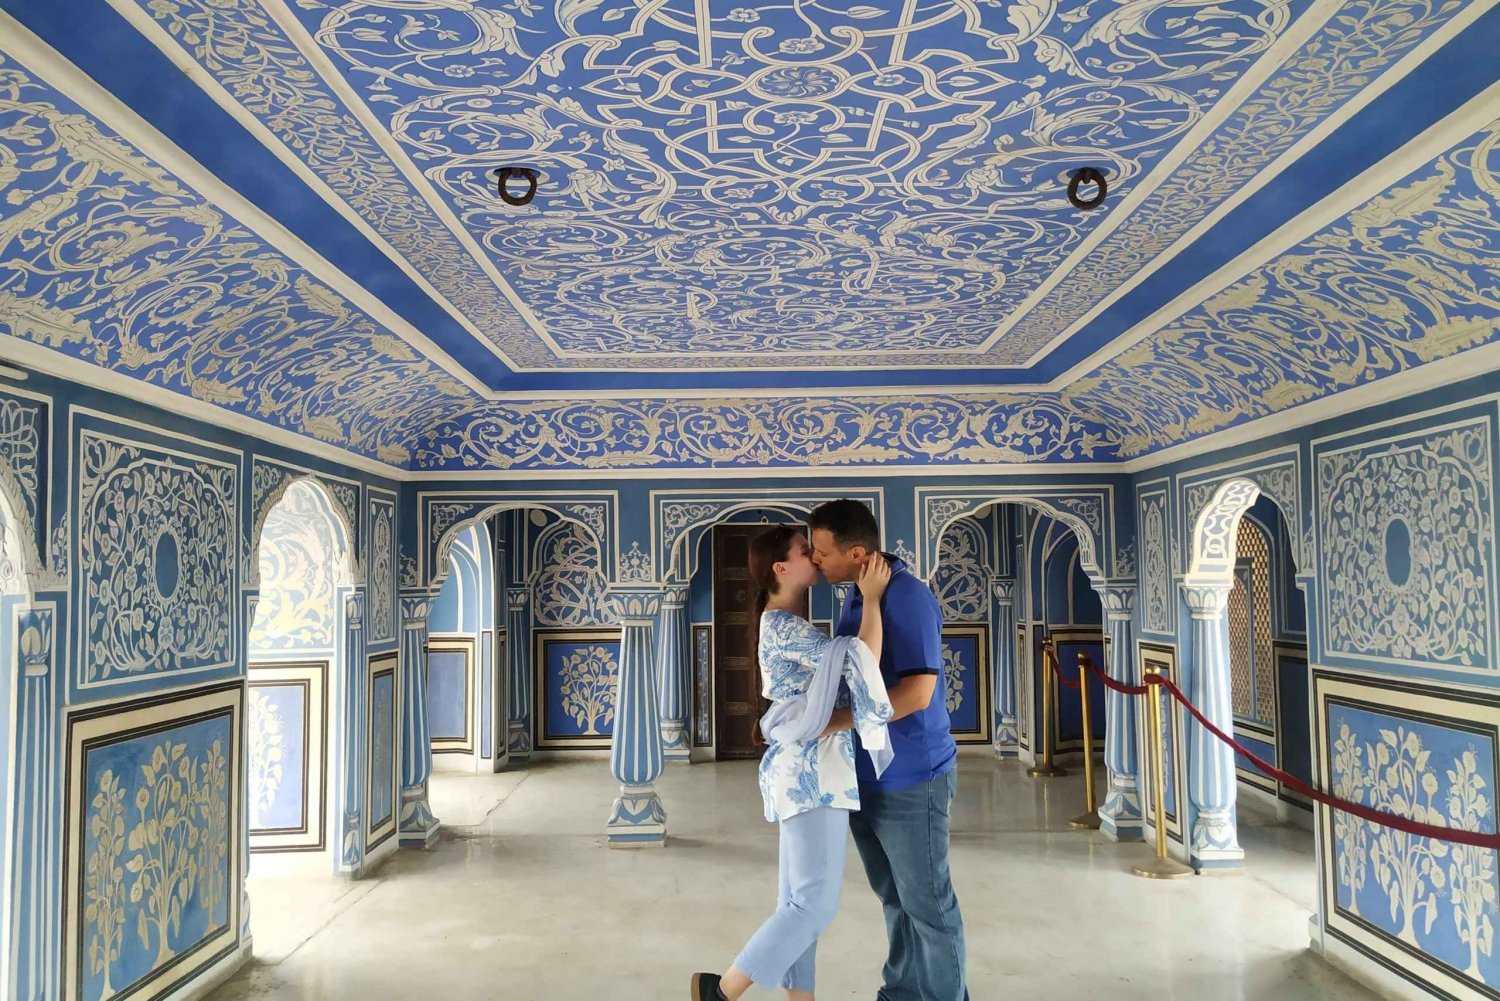 Jaipur: Amber Fort, Hawa mahal, City Palace + Tour completo della città